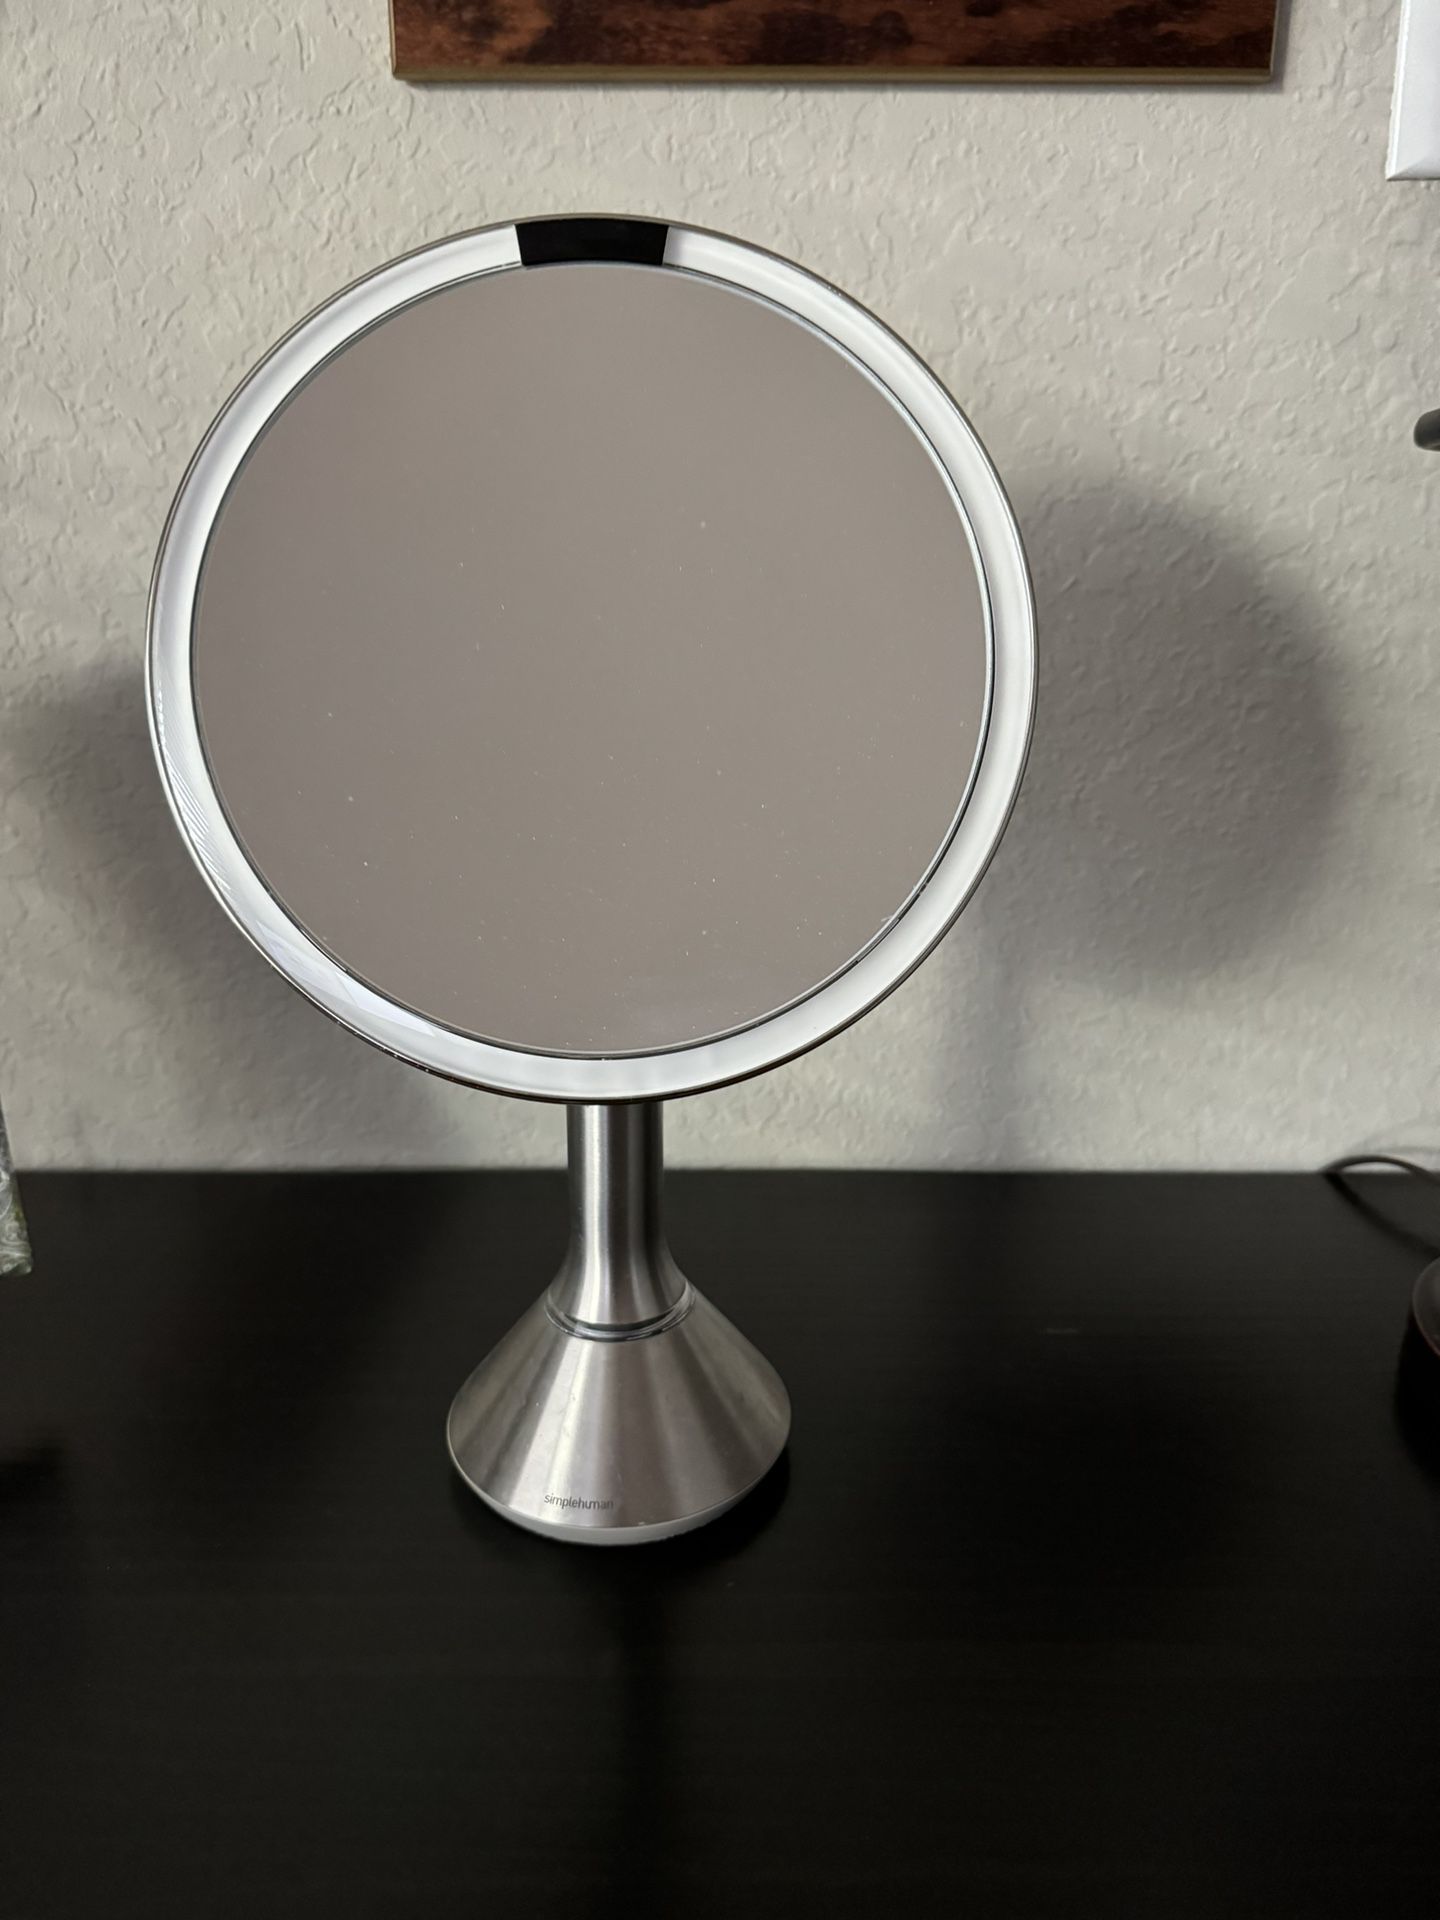 Simplehuman Sensor mirror 8”